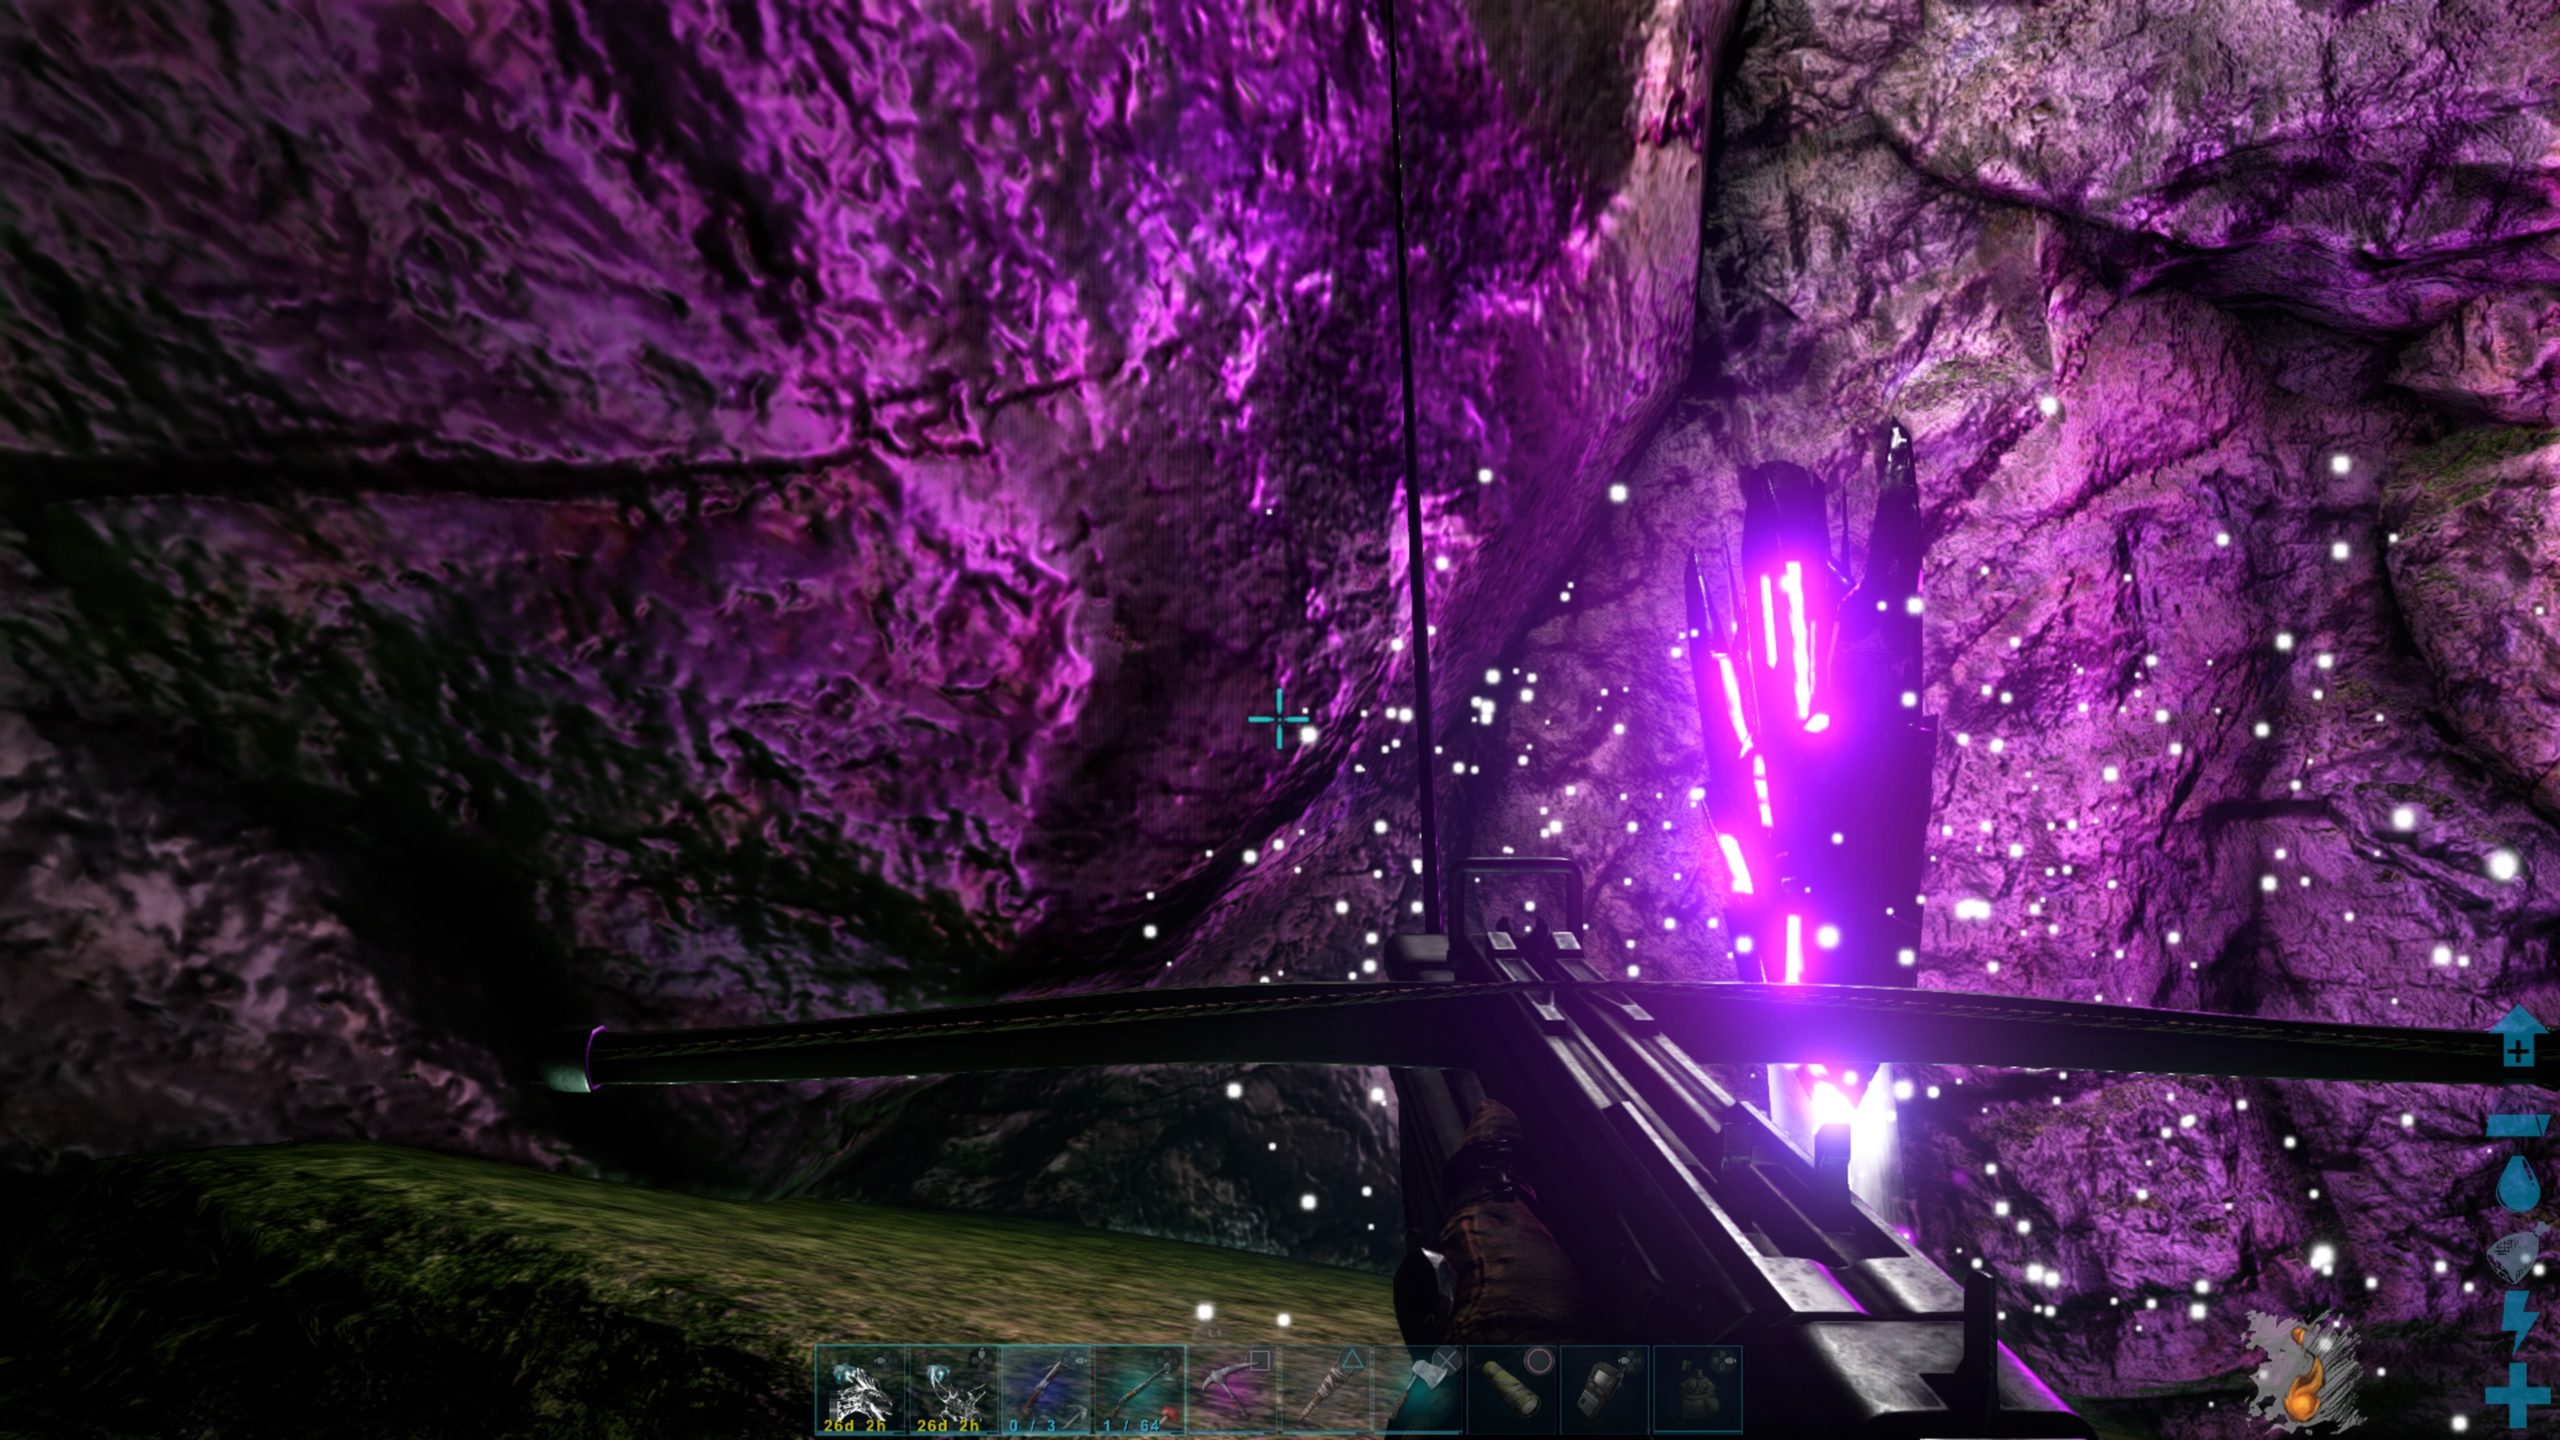 Ark Ps4 バルゲロの遺跡洞窟を攻略 野獣 暴食のアーティファクトを回収 Hrk無意識ゲーム録